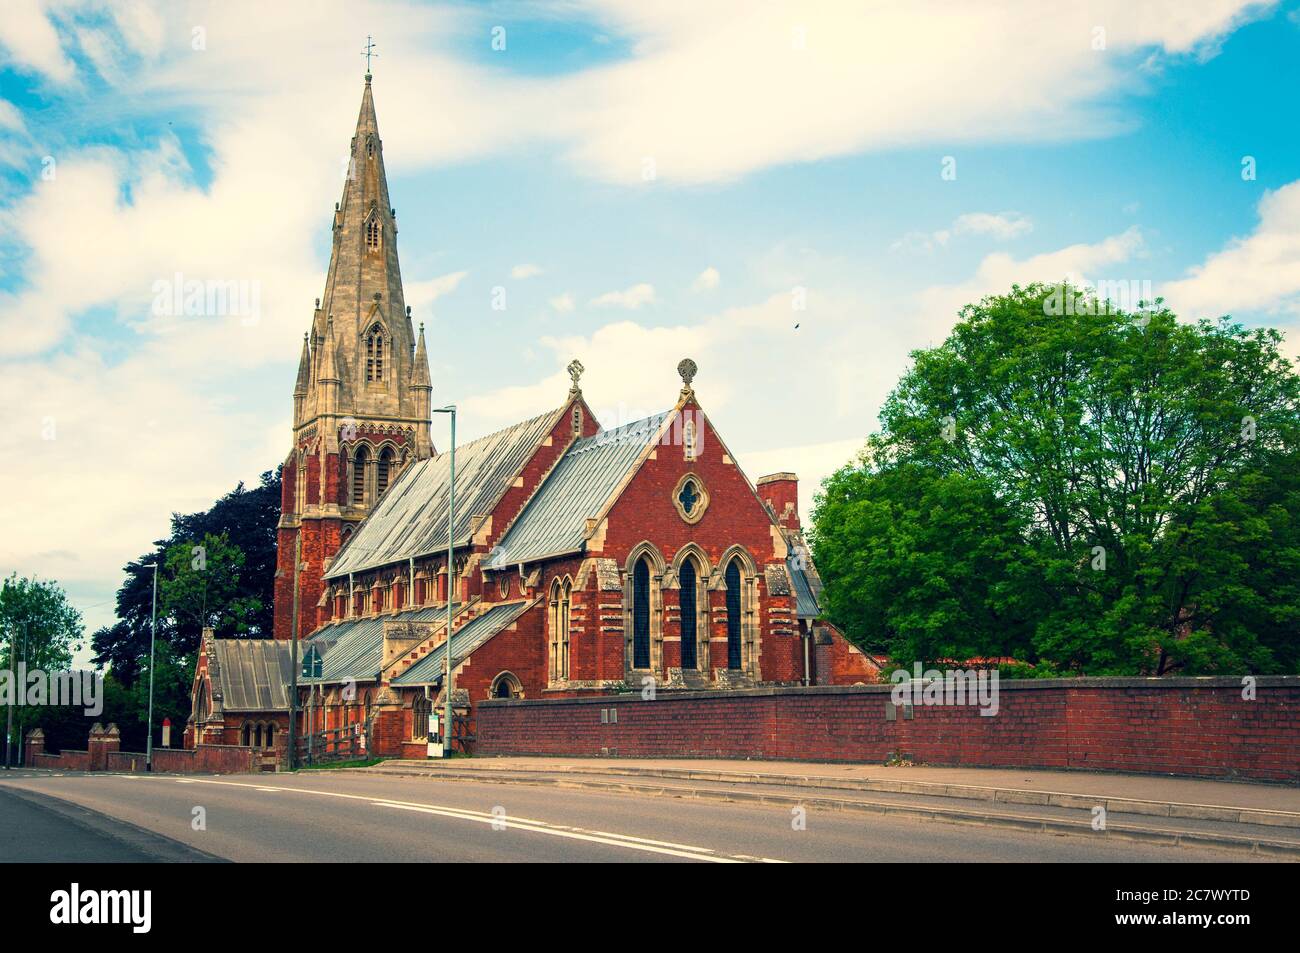 Trees surrounding St Paul's Church in England, UK Stock Photo